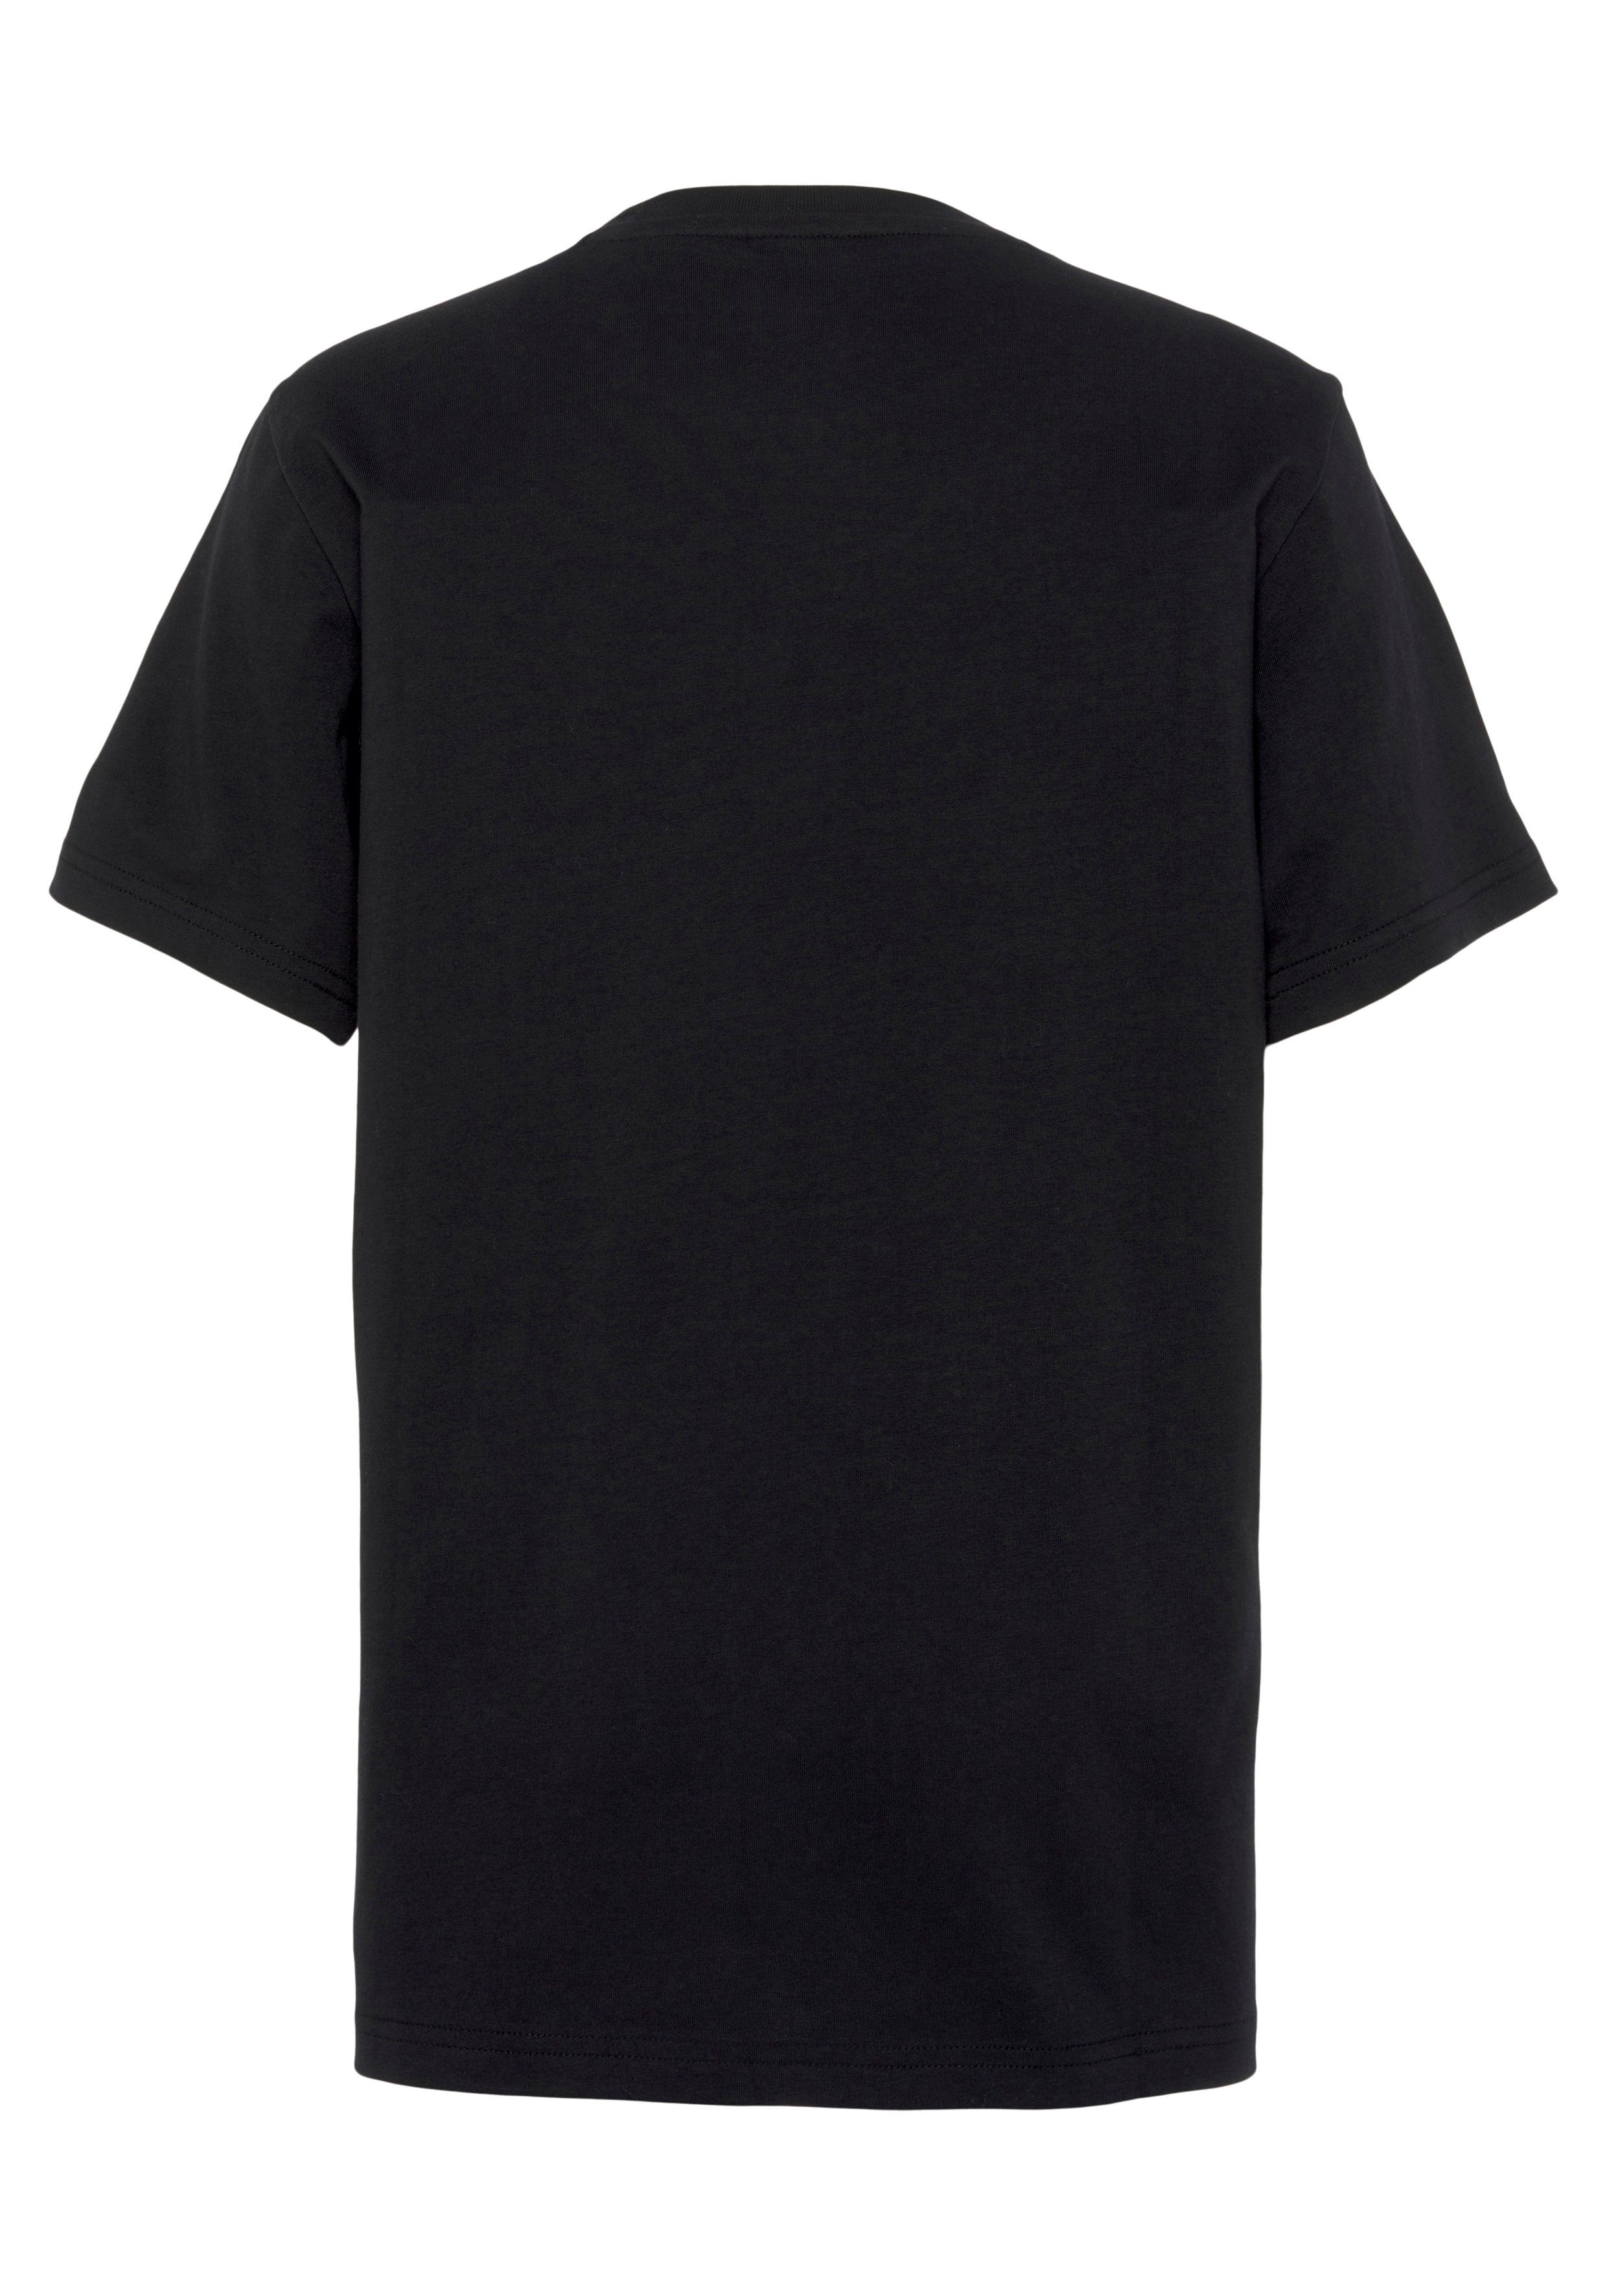 Logo Champion für Crewneck large Kinder Classic T-Shirt - T-Shirt schwarz